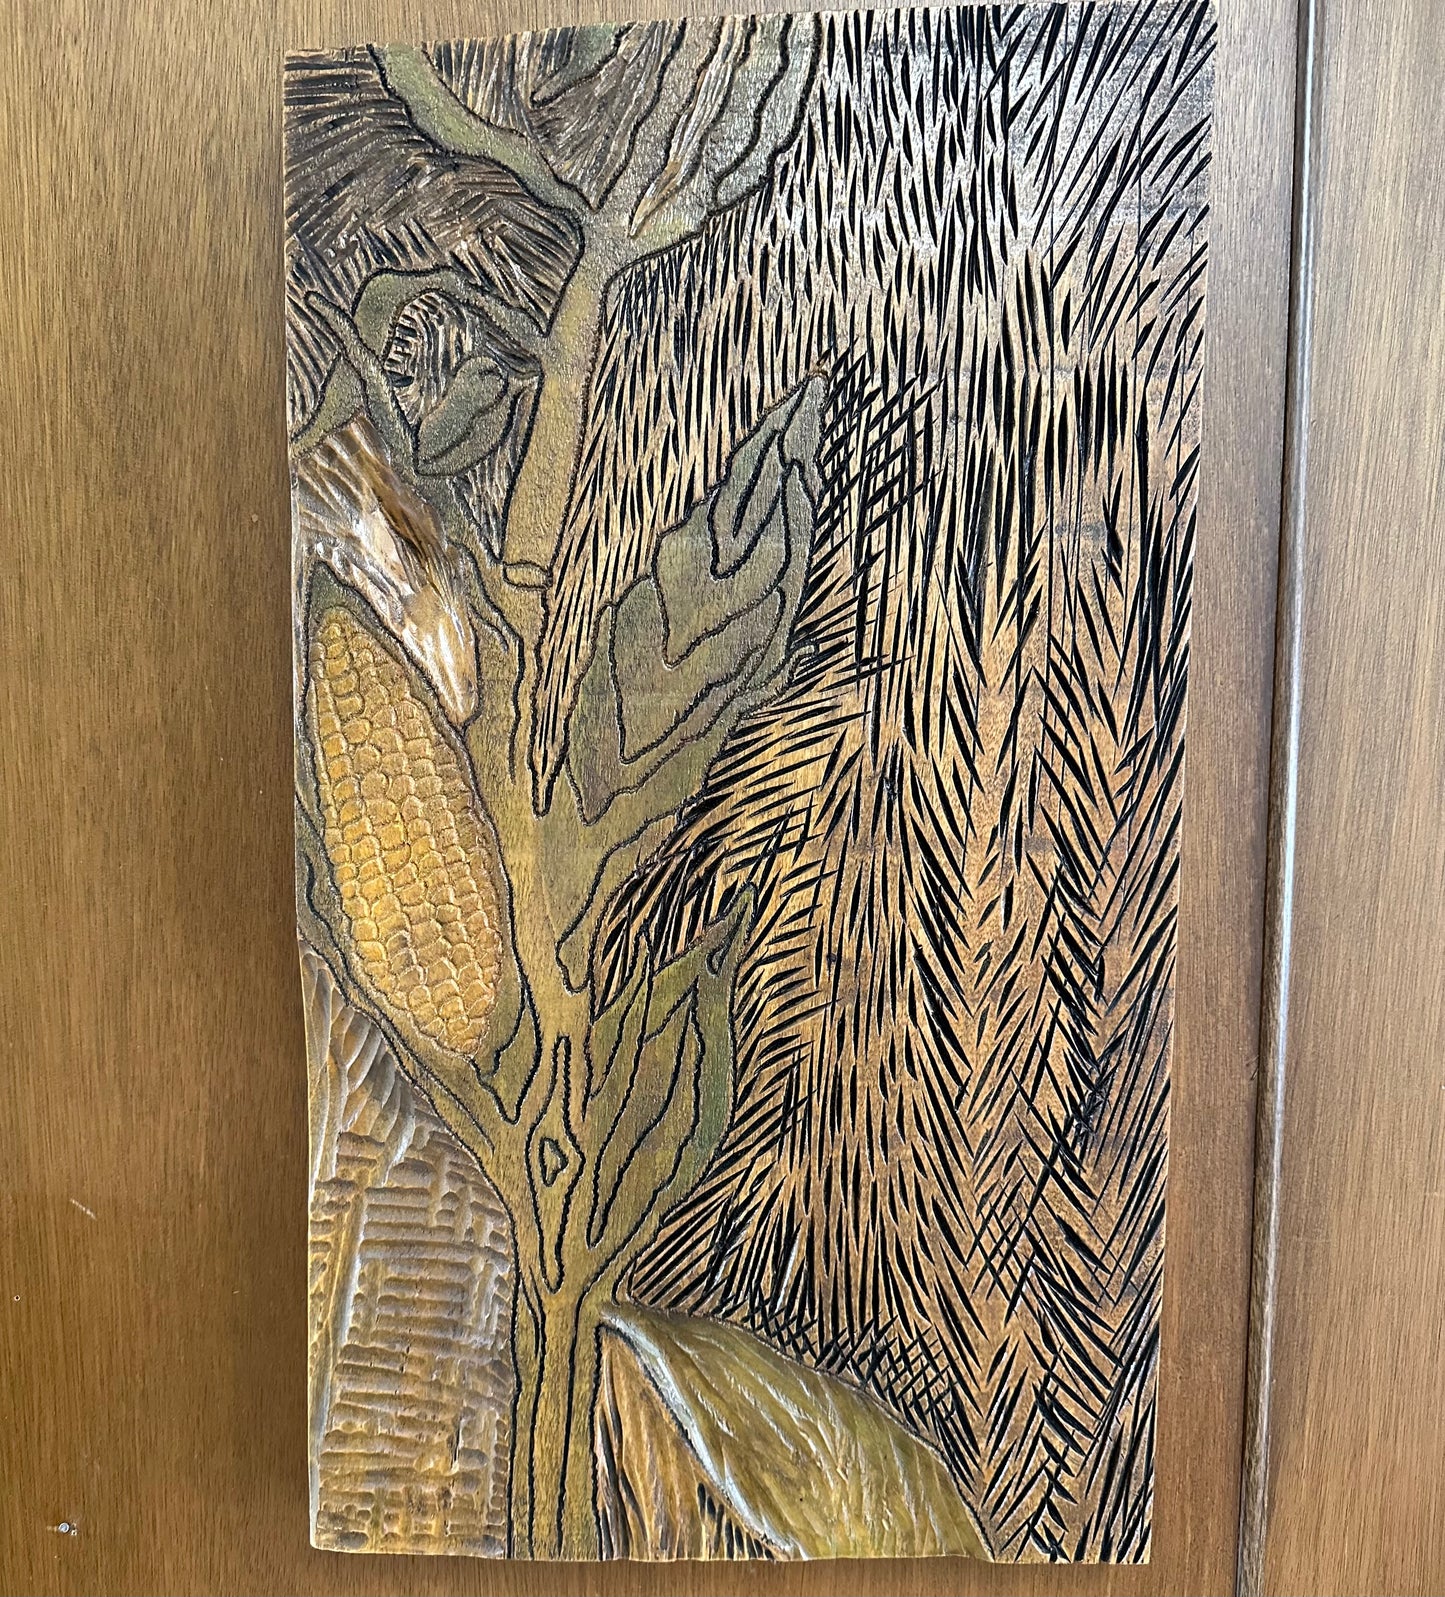 Gary Grana Wood Carved Art